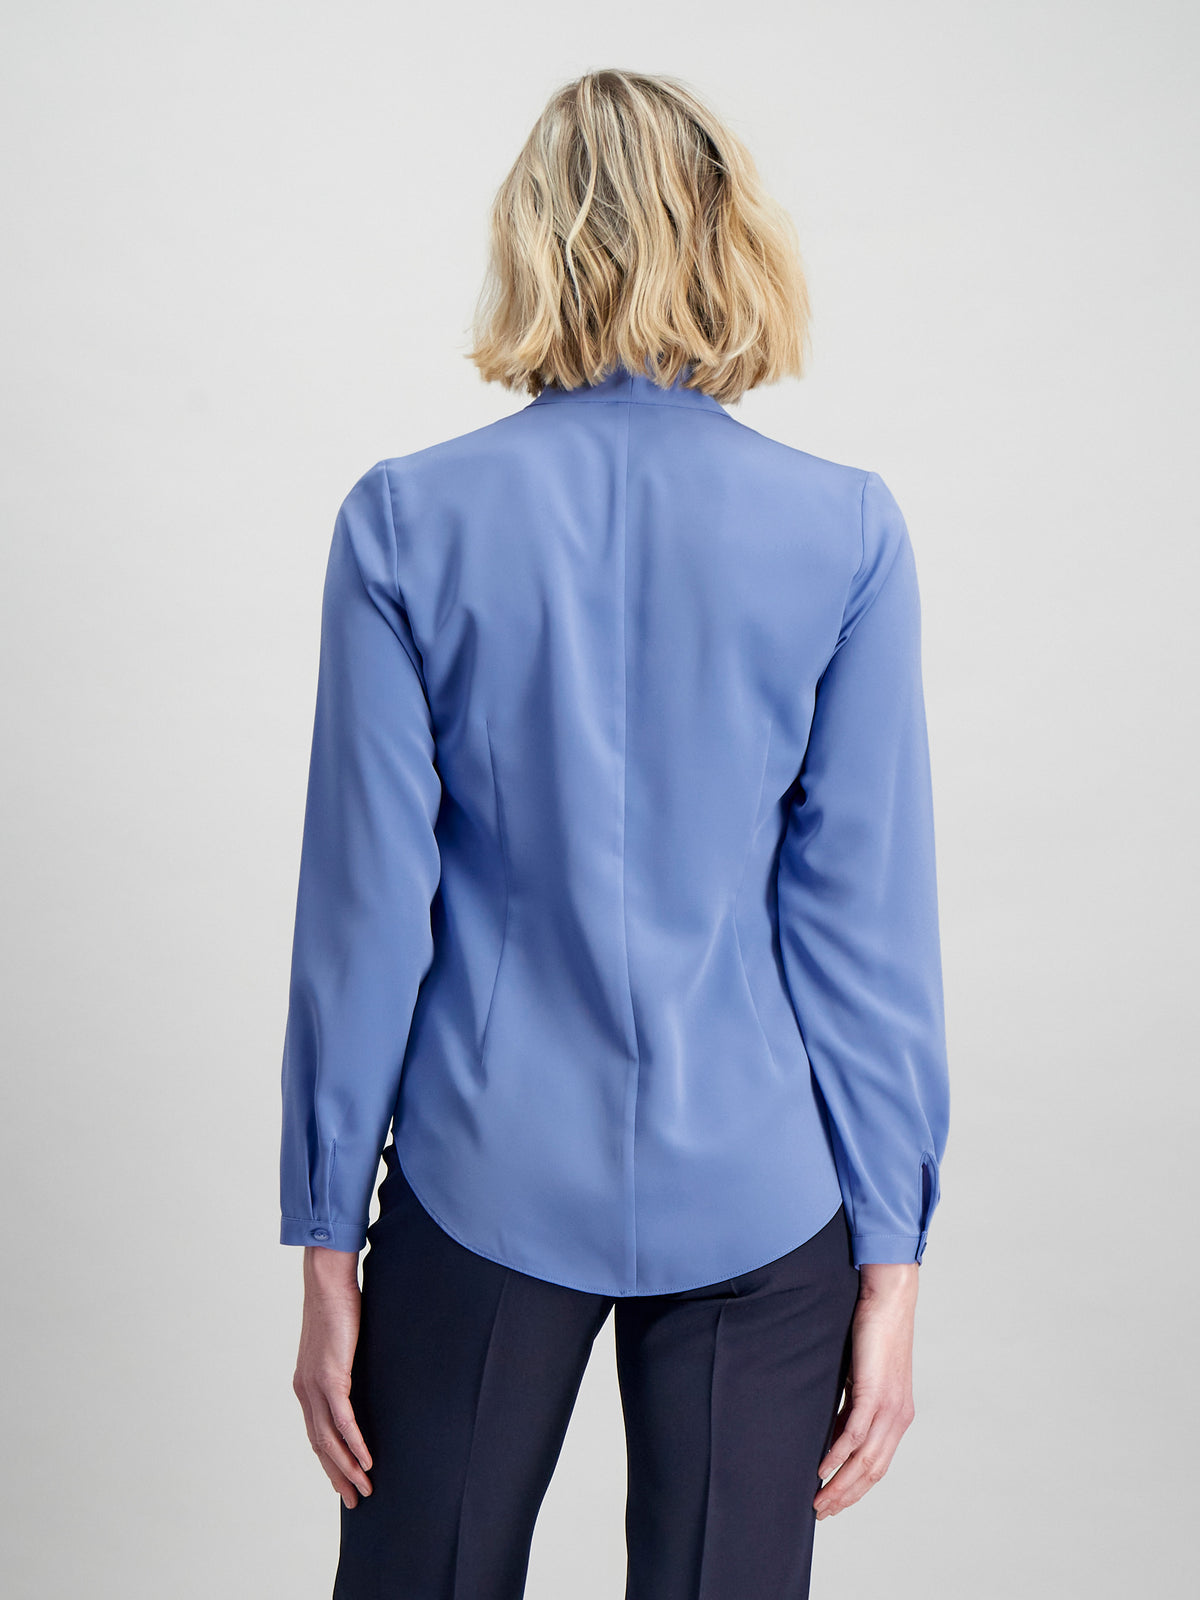 Misha pleated V-neck blouse- light blue